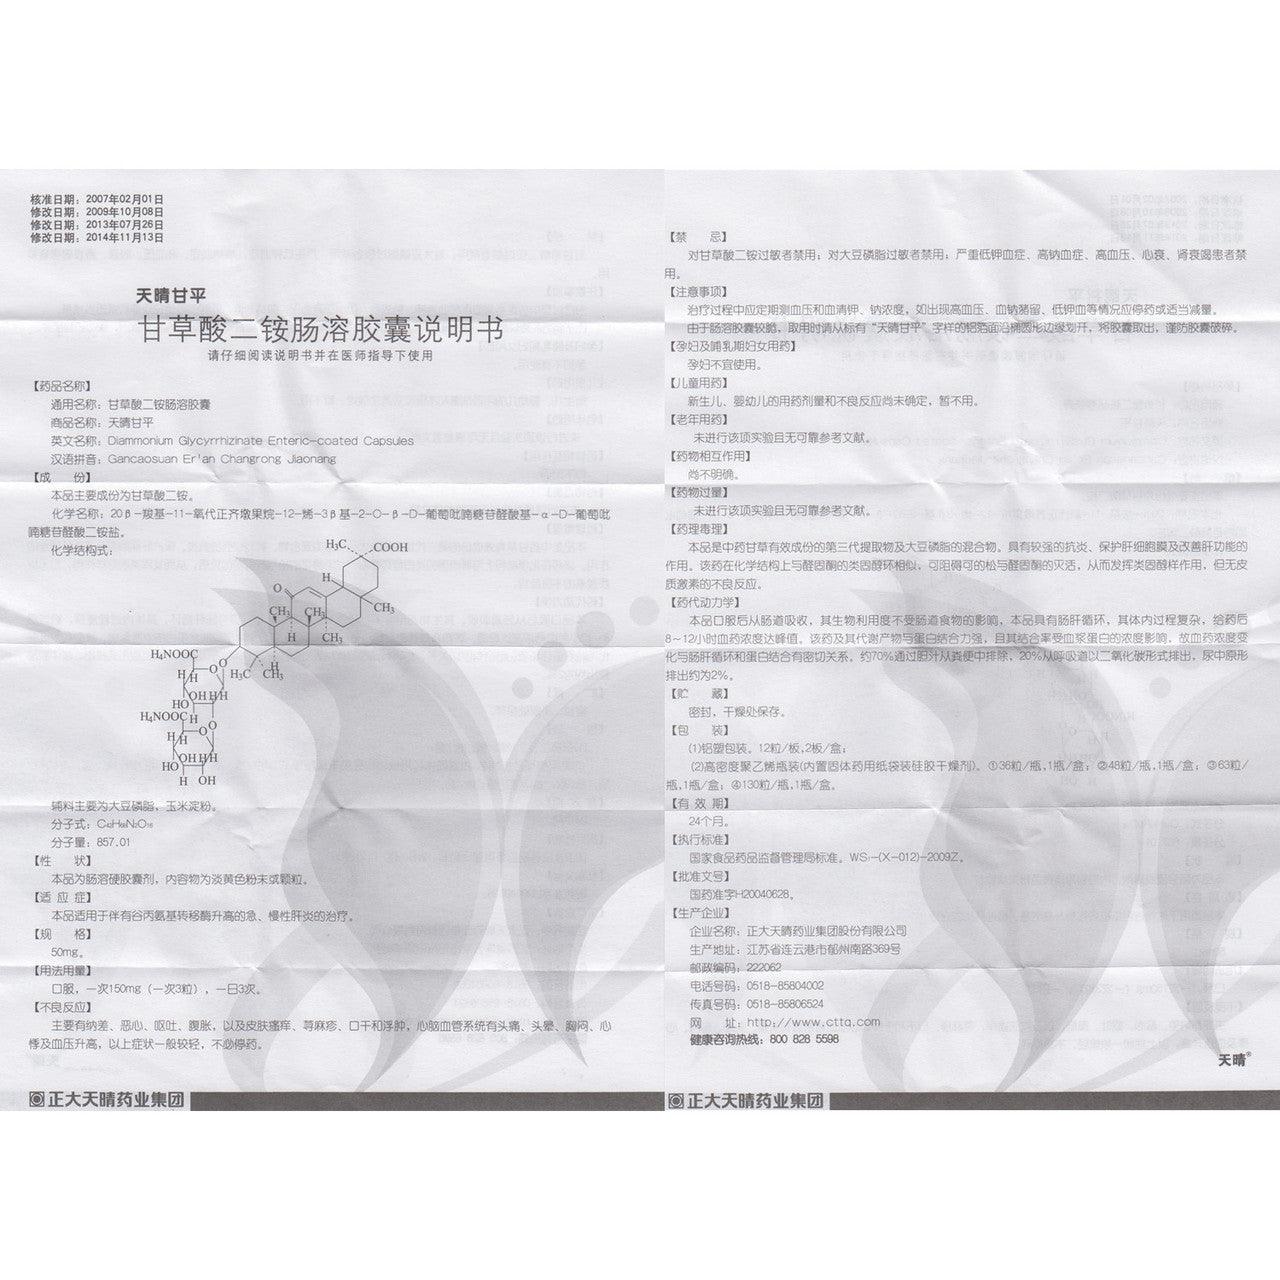 Tianqing Ganping Diammonium Glycyrrhizinate Enteric-Coated Capsules For Hepatitis 50mg*24 Capsules*5 boxes